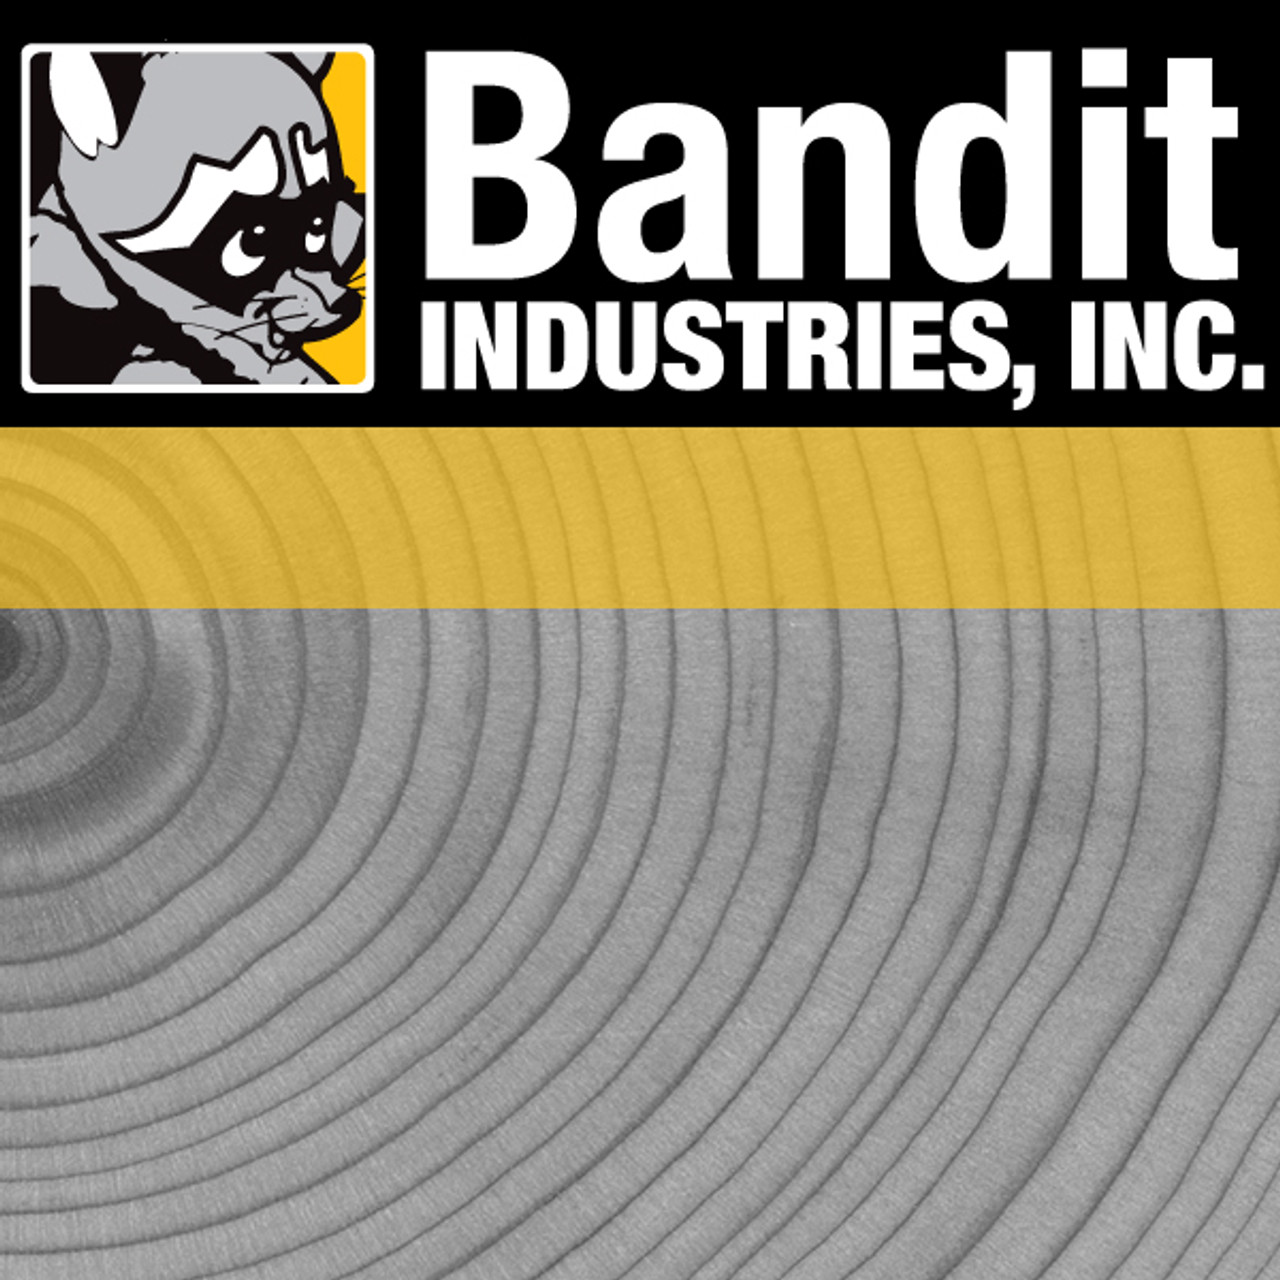 900-2906-05: BANDIT 1"" X 4' BLACK HEAT SHRINK